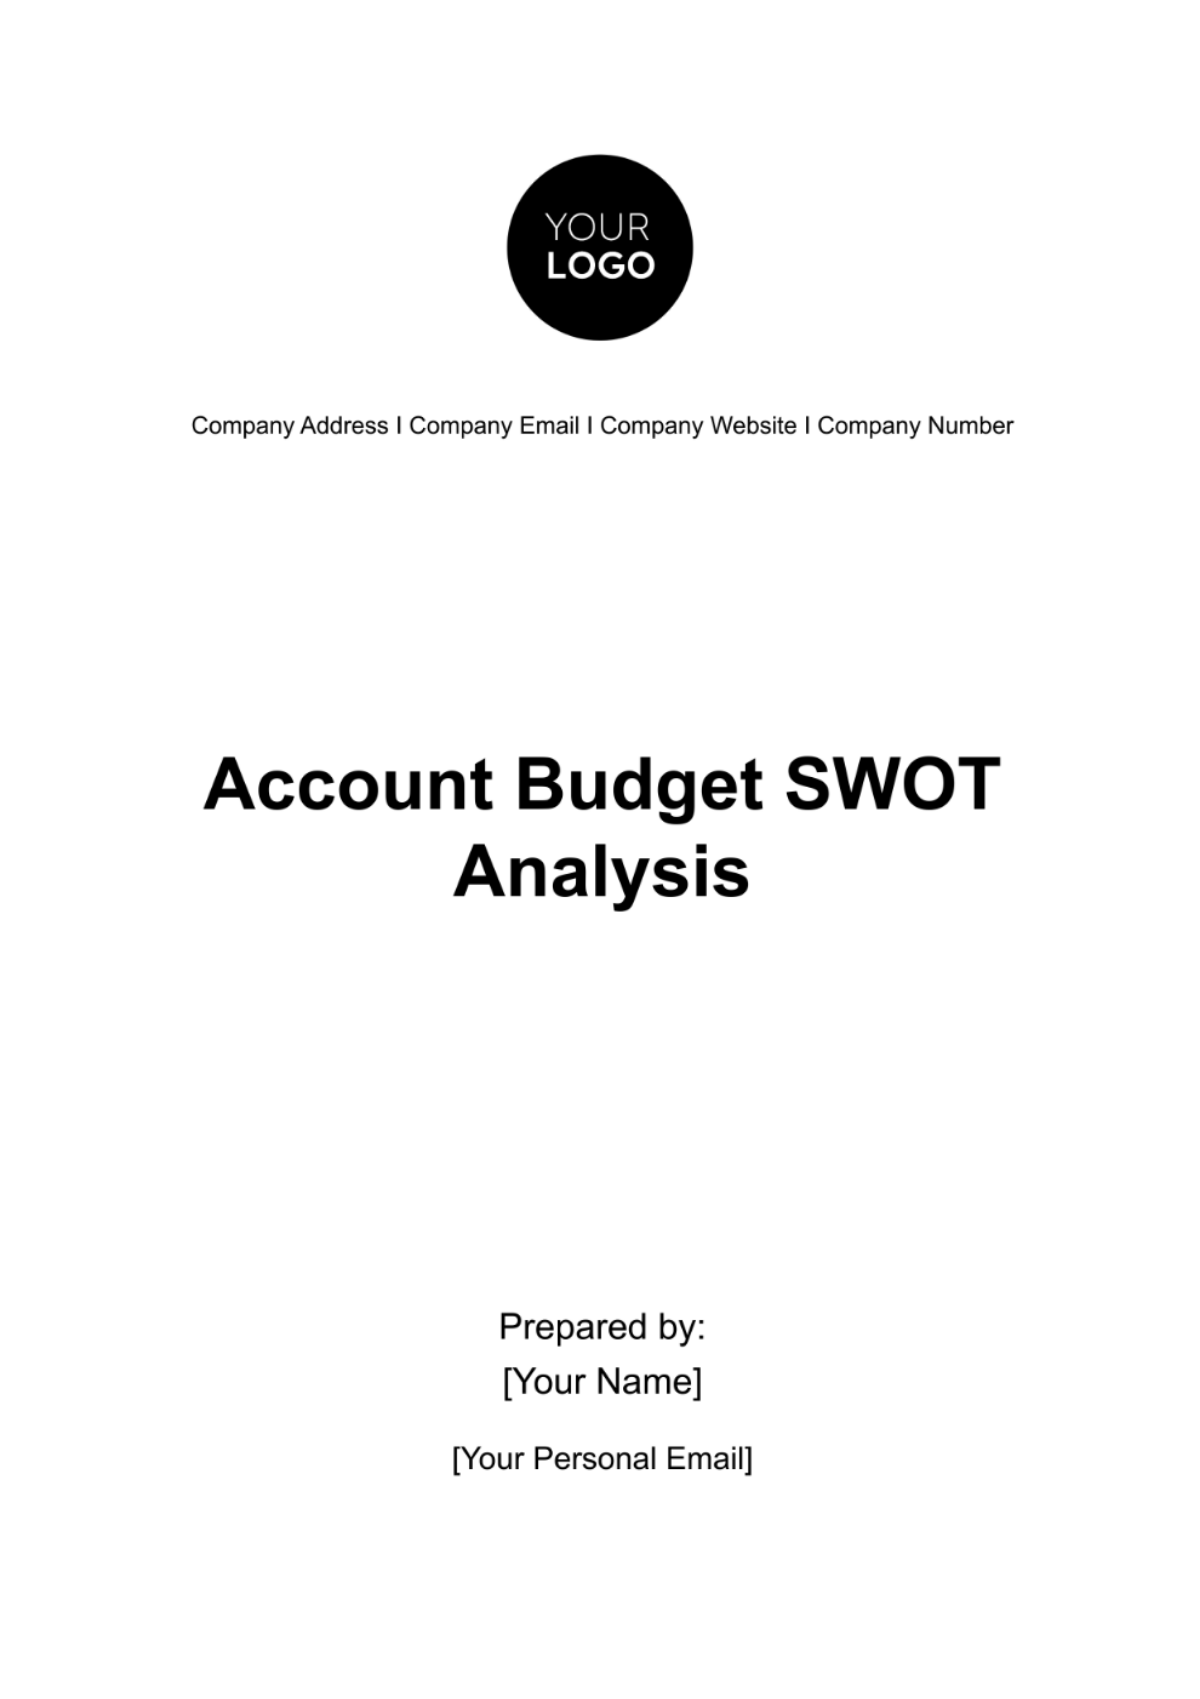 Account Budget SWOT Analysis Template